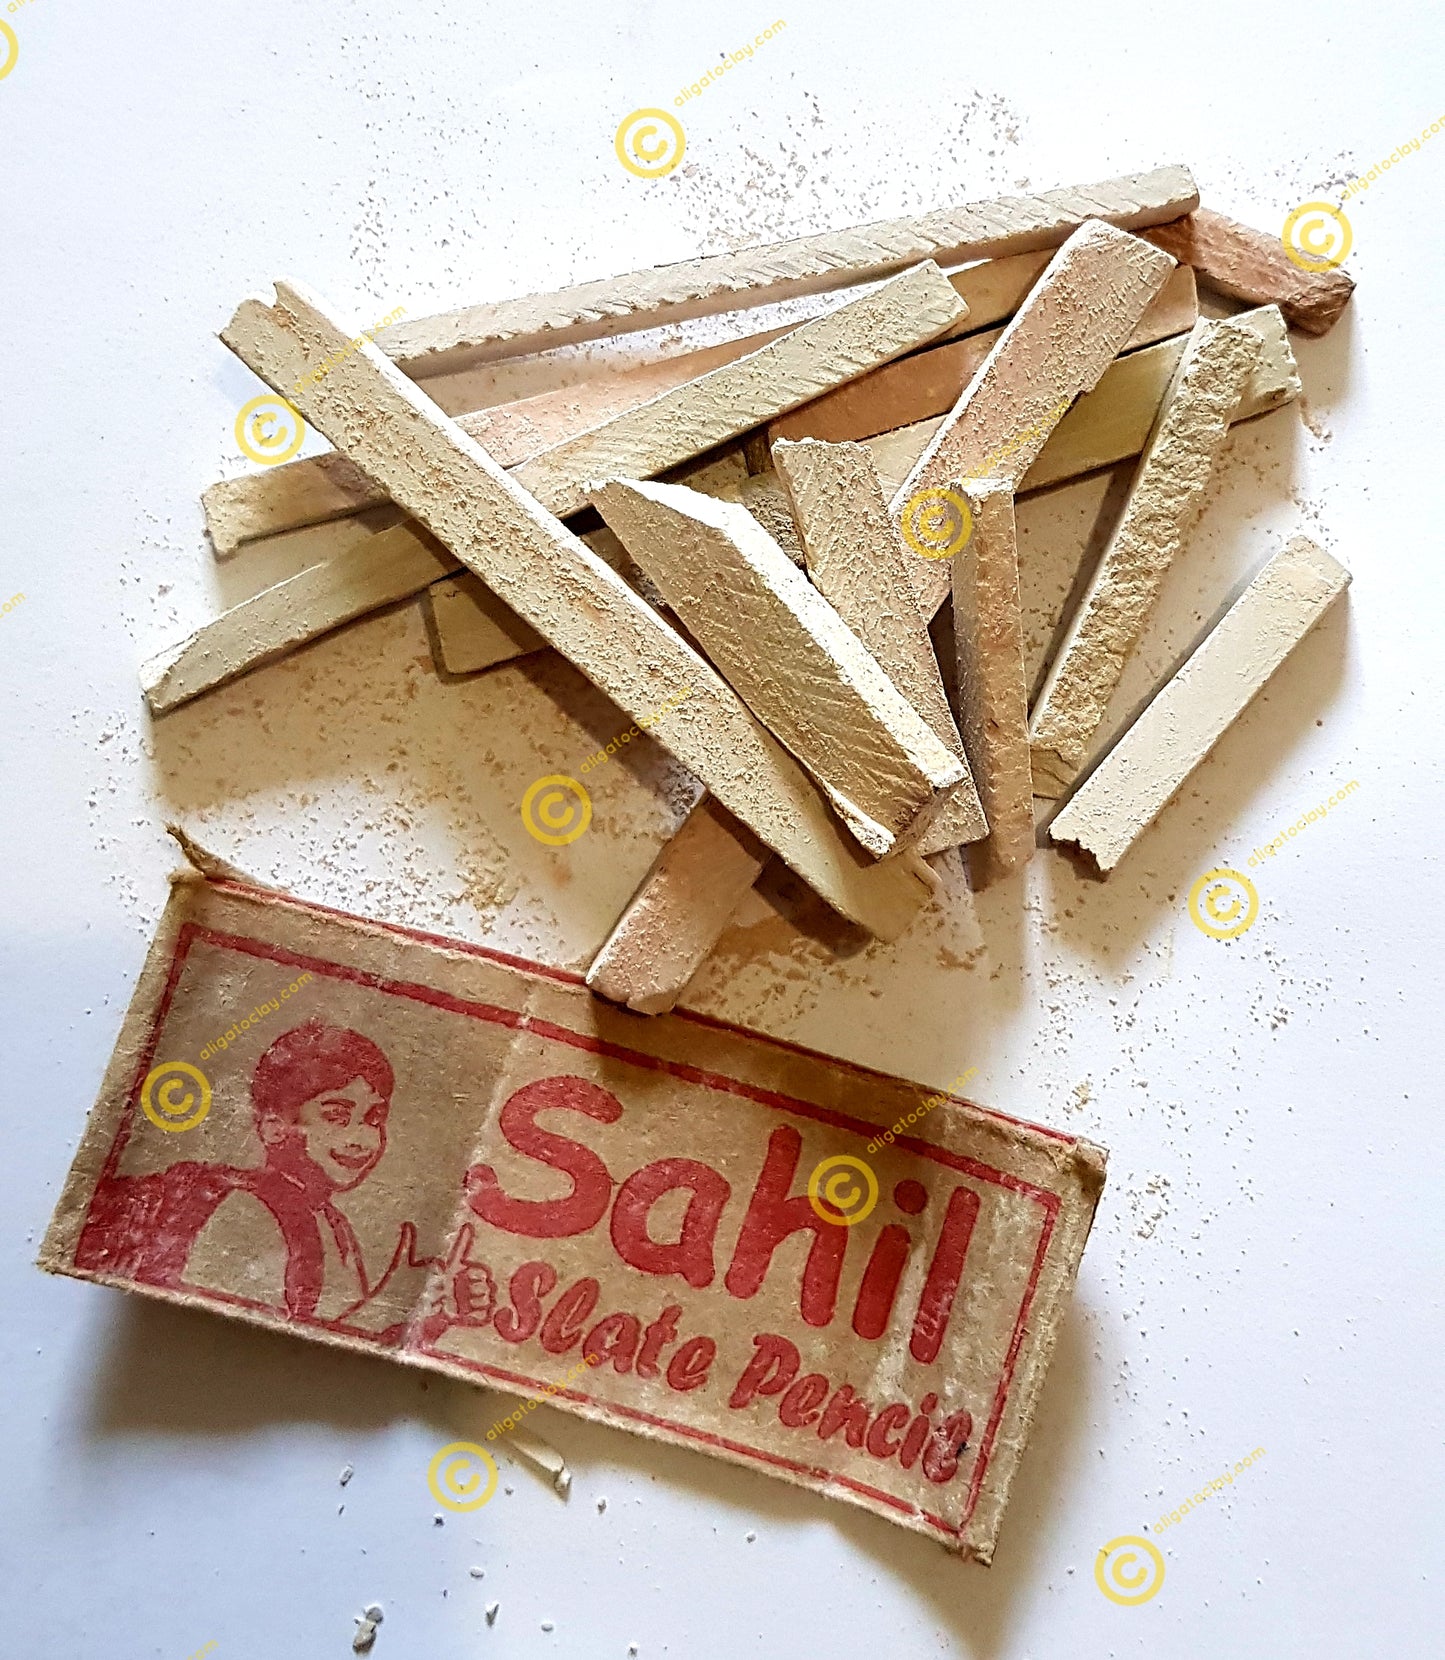 SAHIL Brand Broken Slate Pencils 25grams Sample